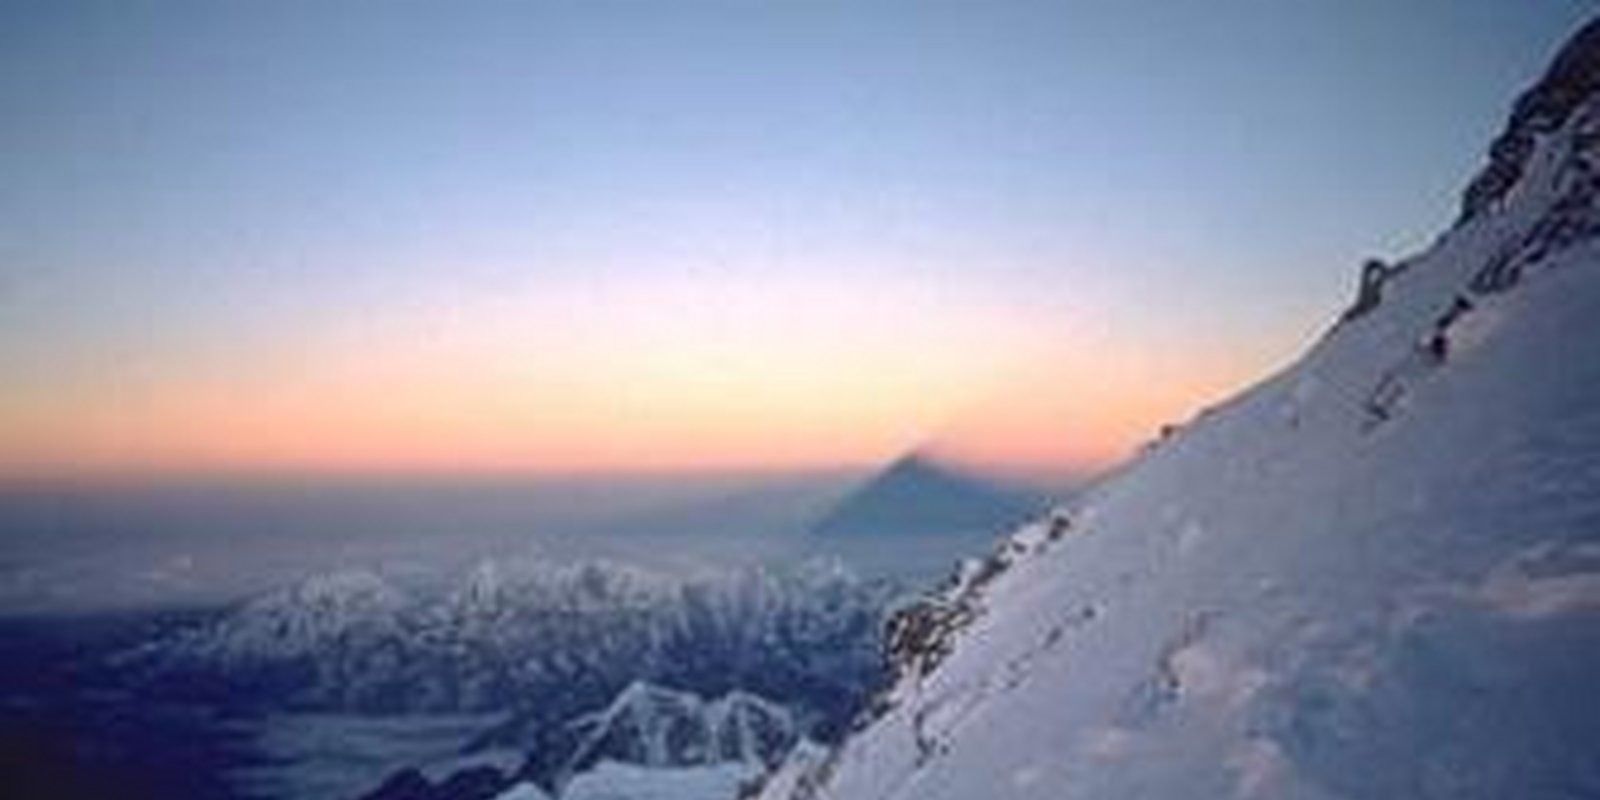 Everest - Gipfel ohne Gnade